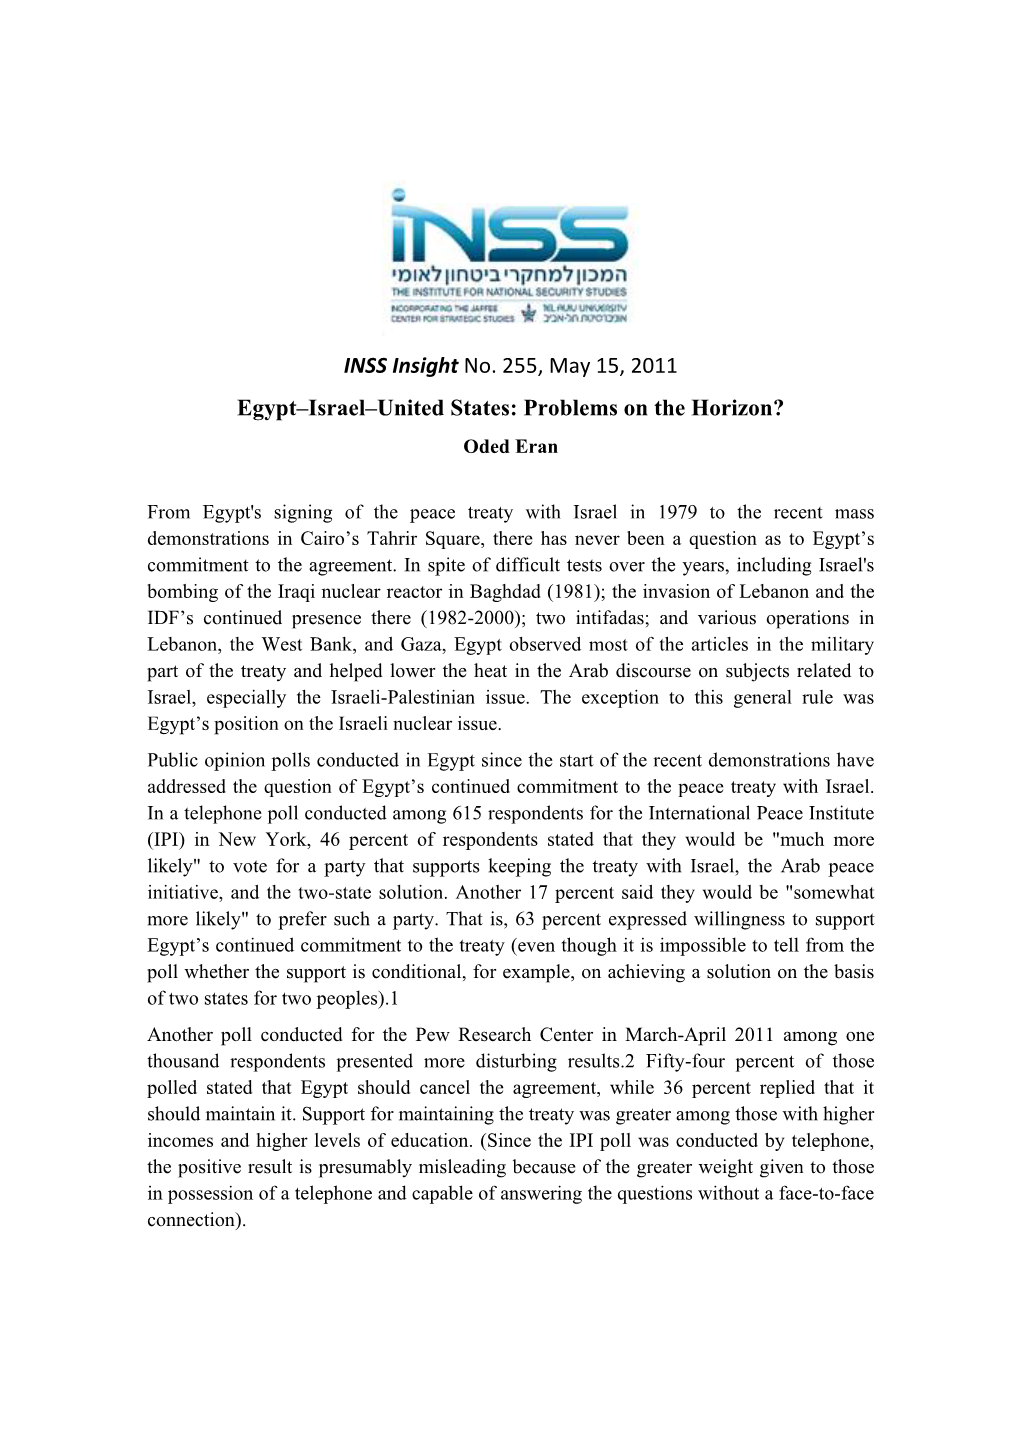 Egypt–Israel–United States: Problems on the Horizon? Oded Eran